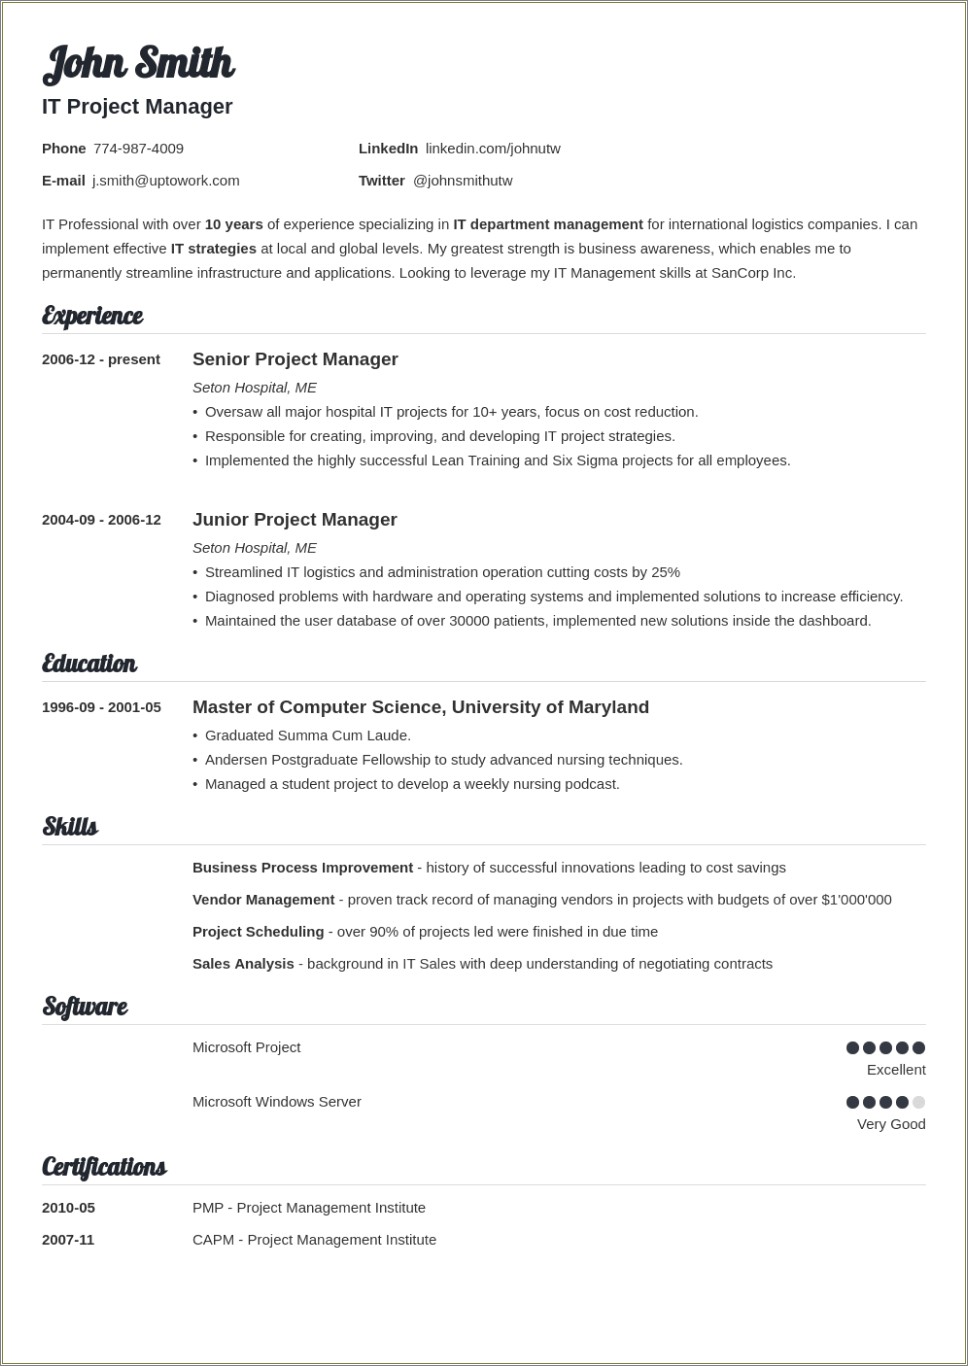 Resume Format Sample For Job Application